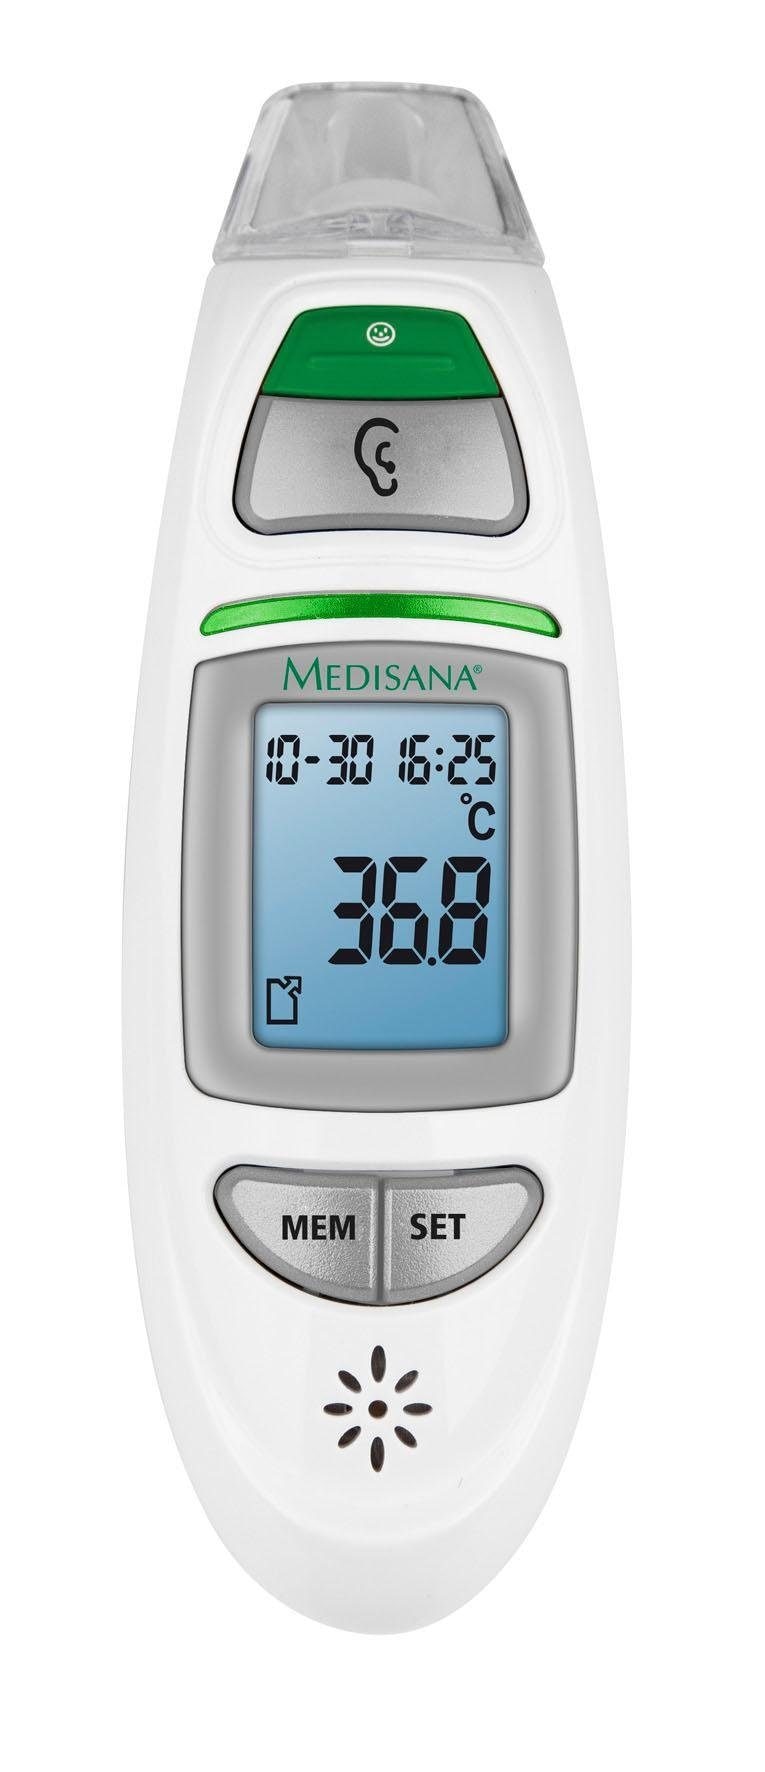 750« im %Sale Medisana Infrarot-Fieberthermometer »TM jetzt